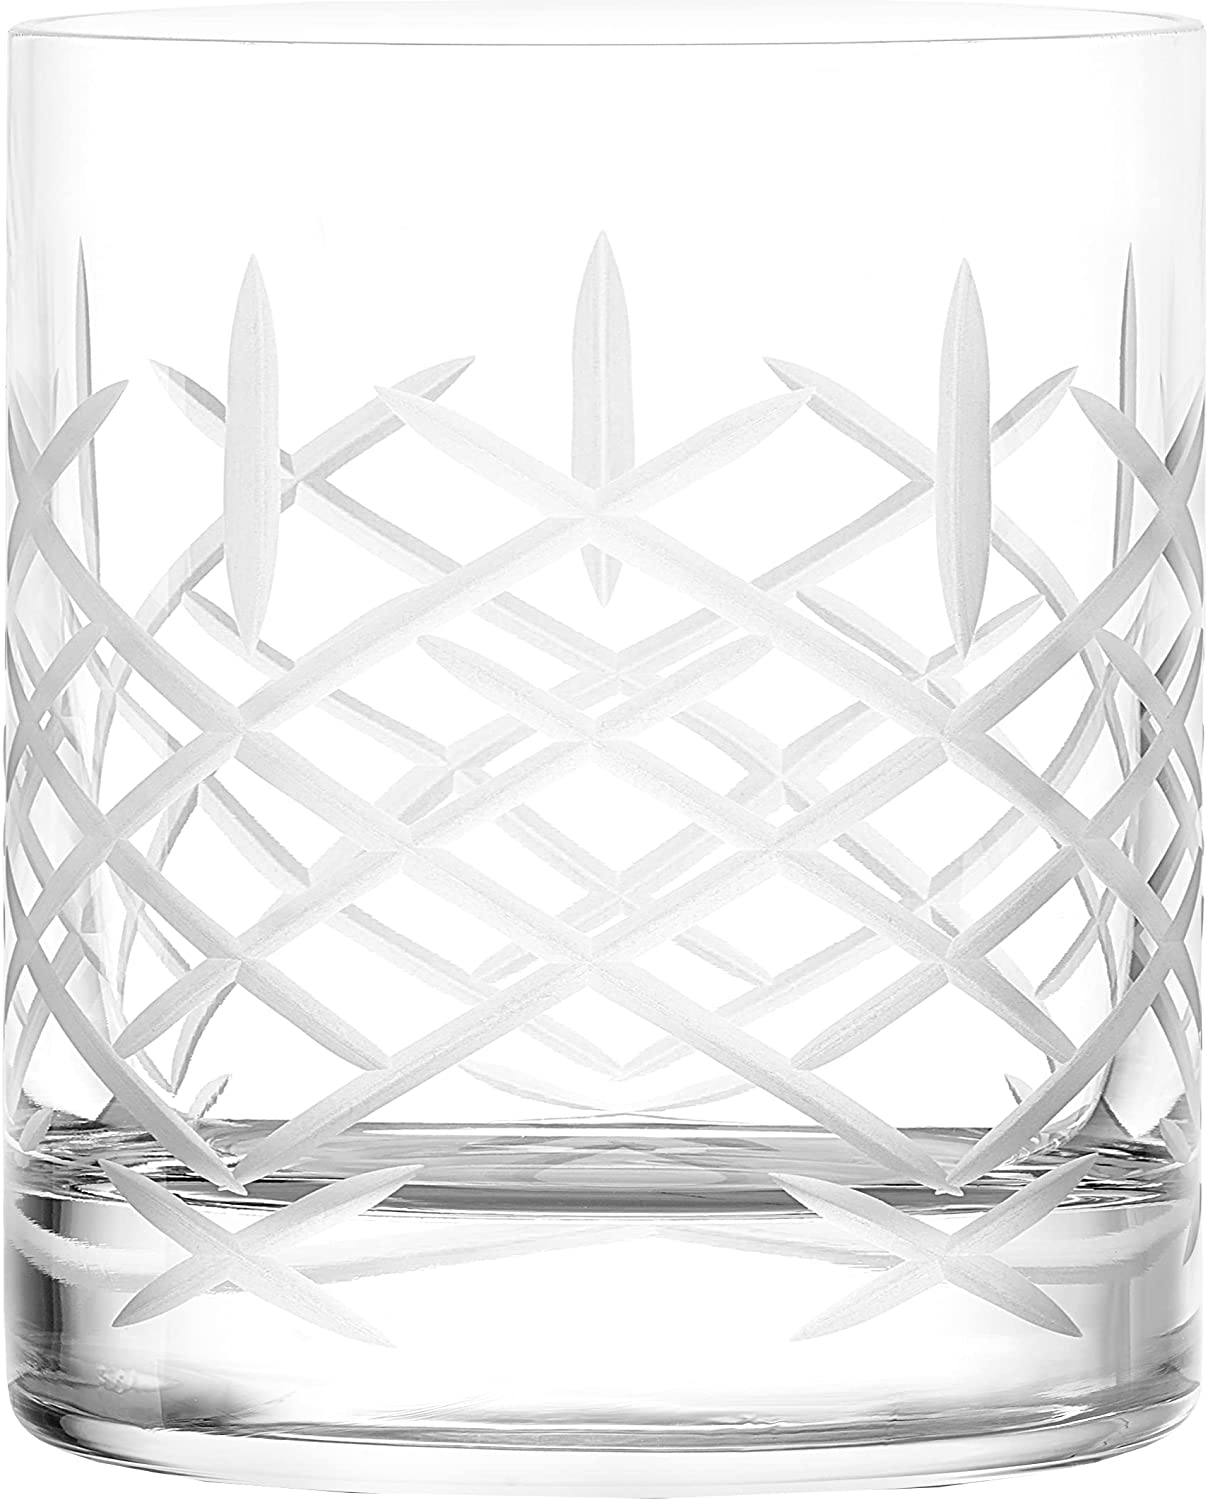 Stölzle Lausitz Pure Whisky I New York Bar Club 320 ml I Set of 6 I Brilliant Crystal Glass with Matte Decorative Cut I Break-resistant and Dishwasher Safe